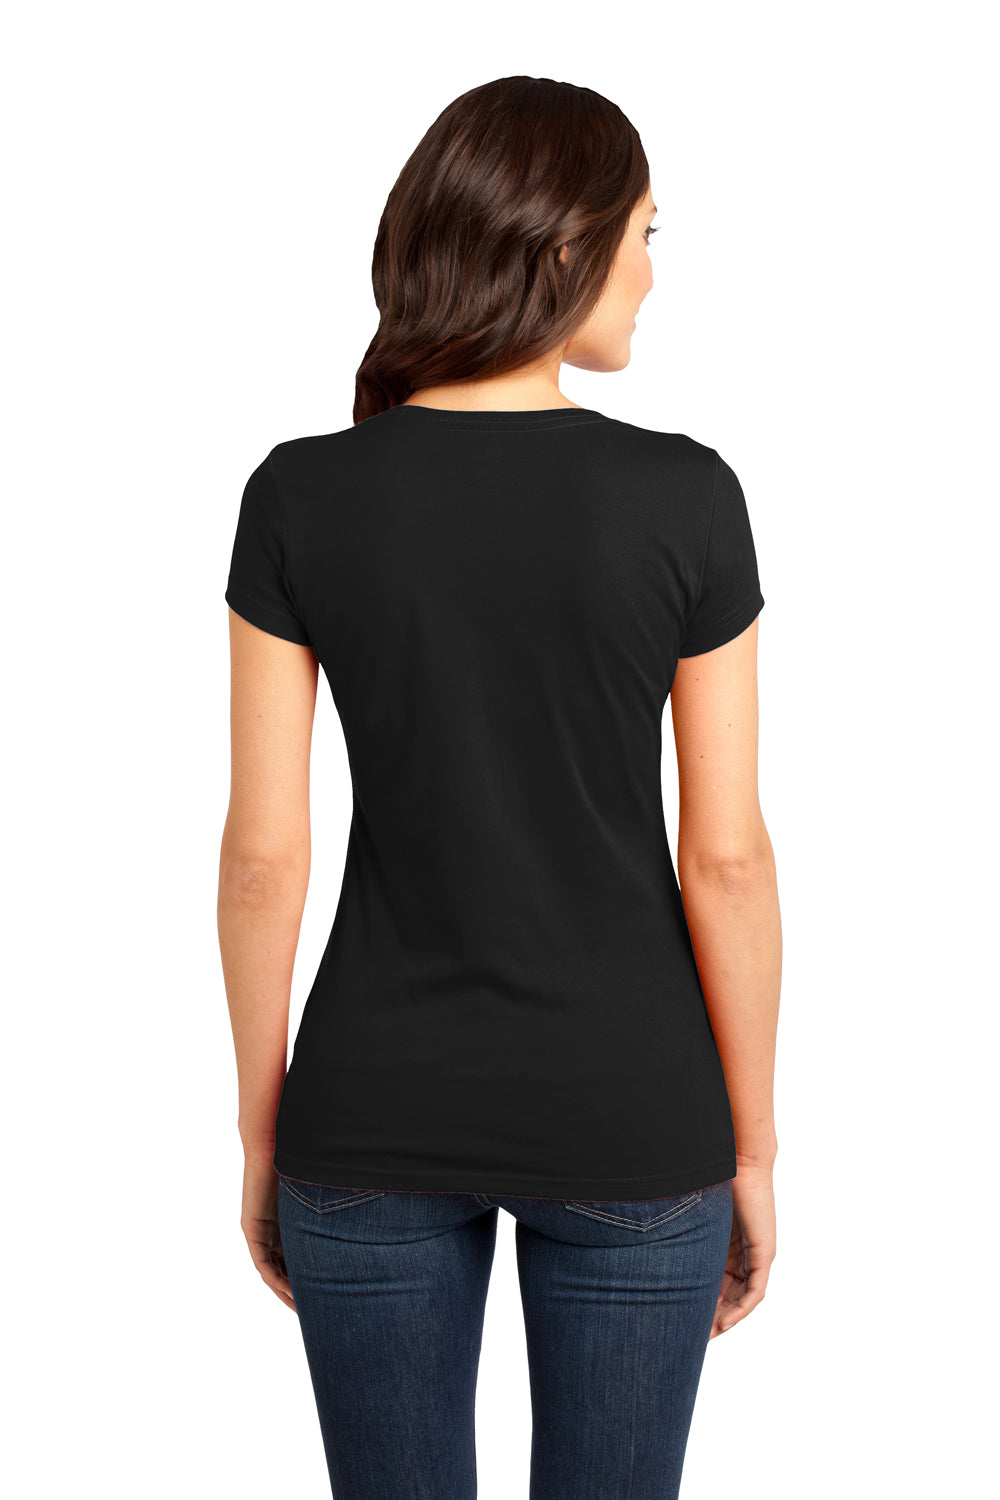 District DT6001 Womens Very Important Short Sleeve Crewneck T-Shirt Black Back